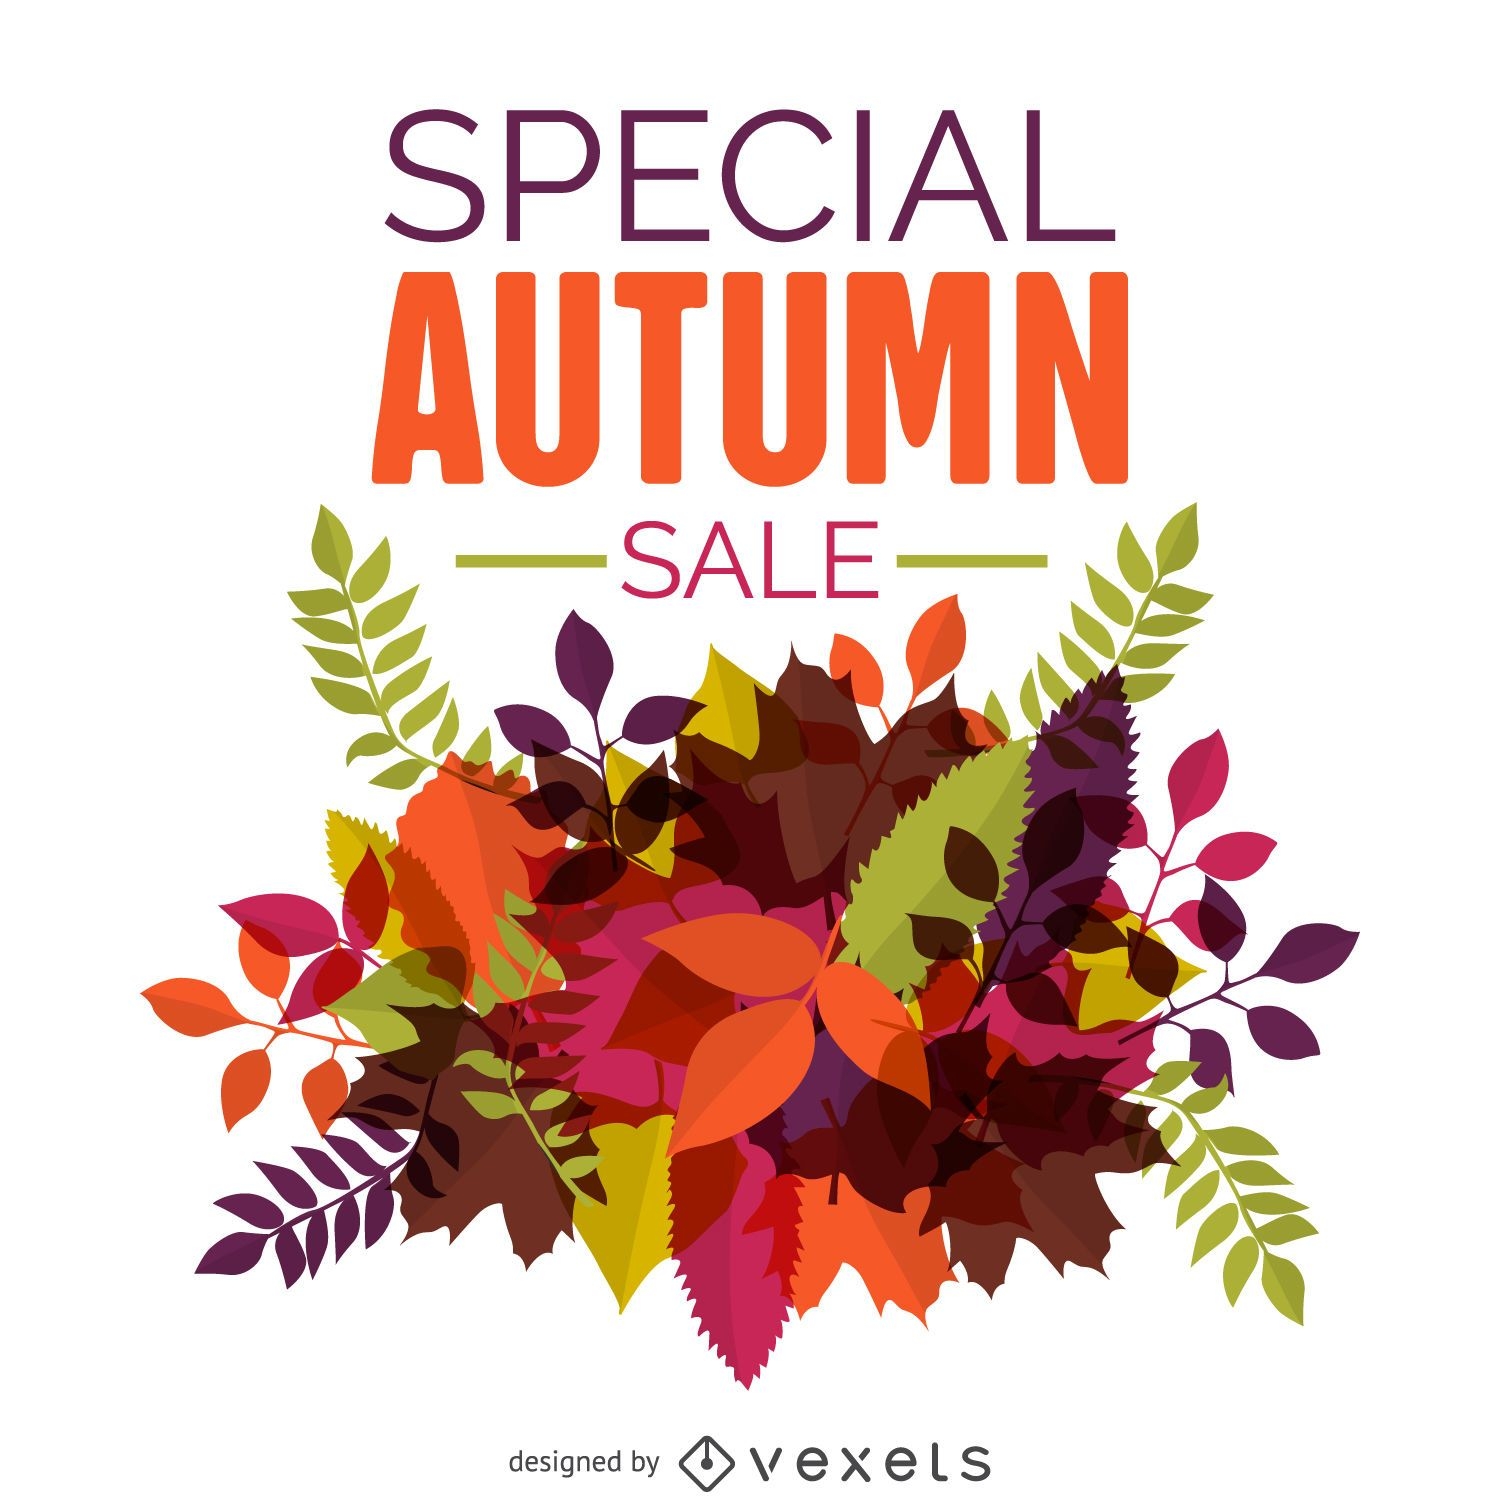 Autumn sale design